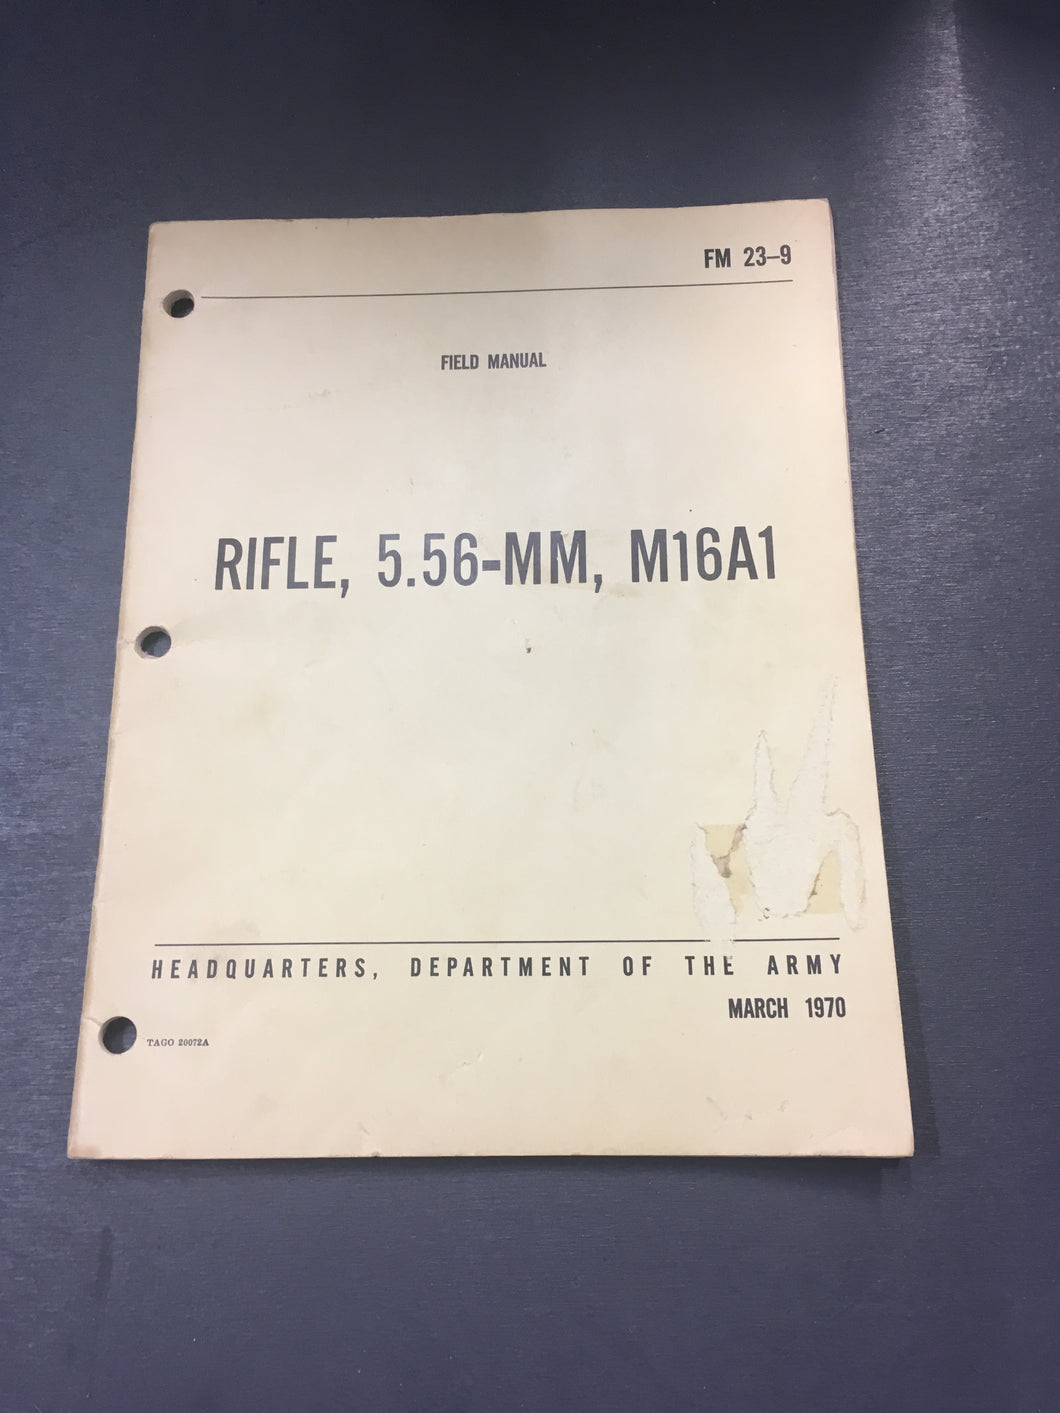 Vietnam Era FM 23-9 Rifle, 5.56-MM, M16A1, March 1970 Manual